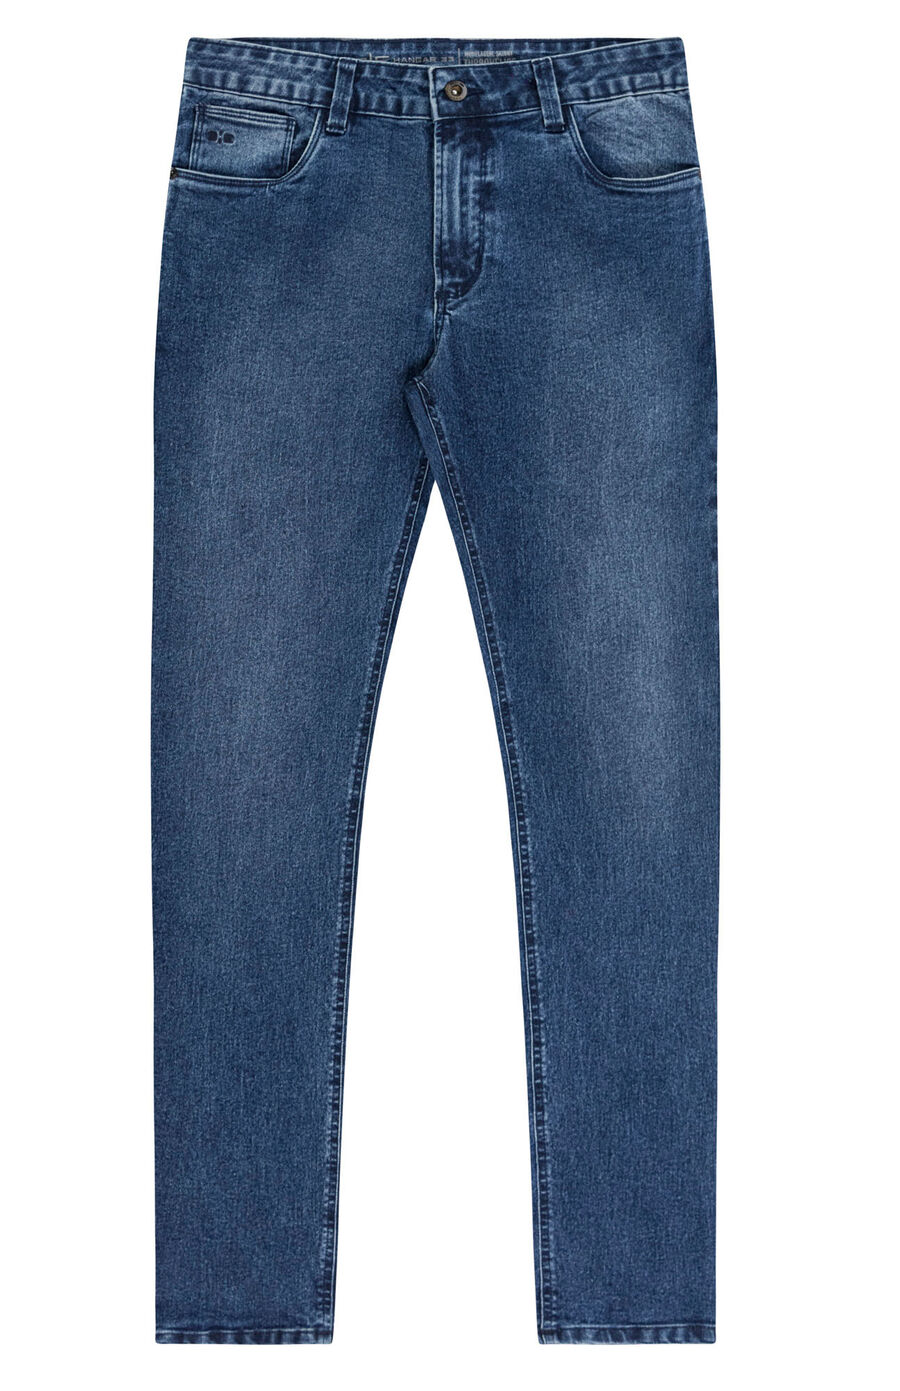 Calça Jeans Médio Masculina Skinny com Elastano, JEANS, large.